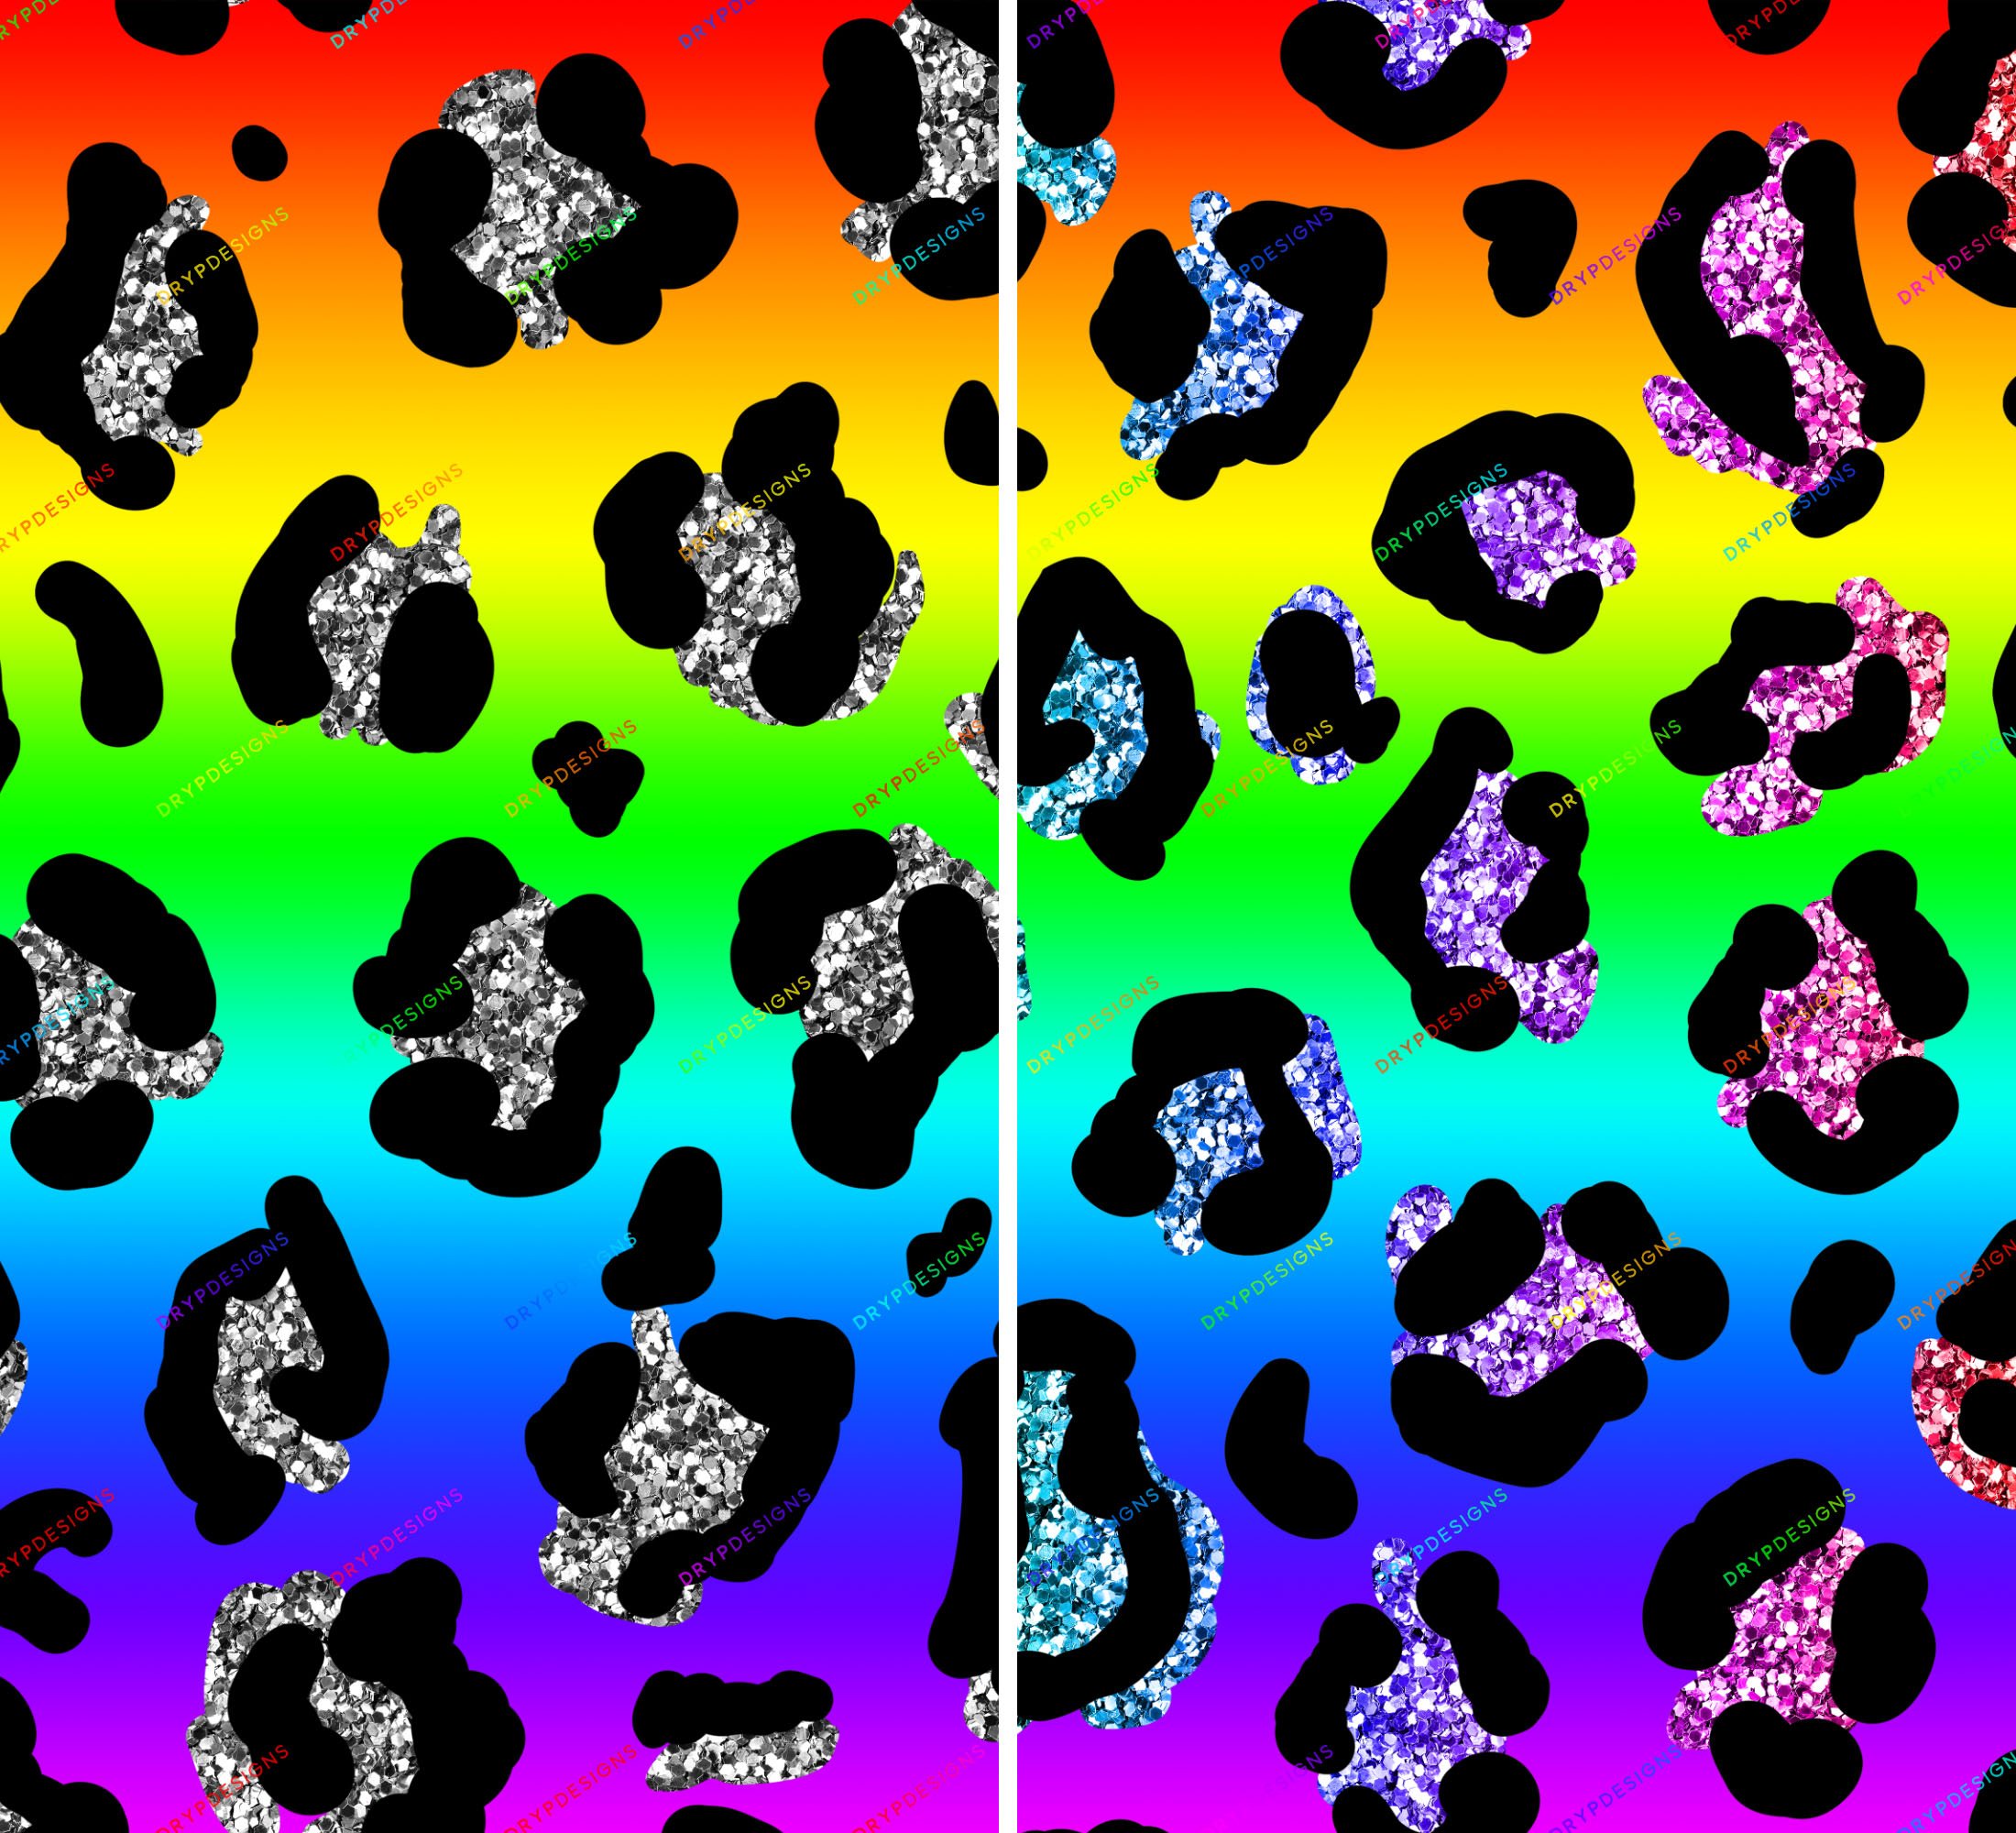 Share more than 93 glitter leopard print wallpaper super hot - in ...